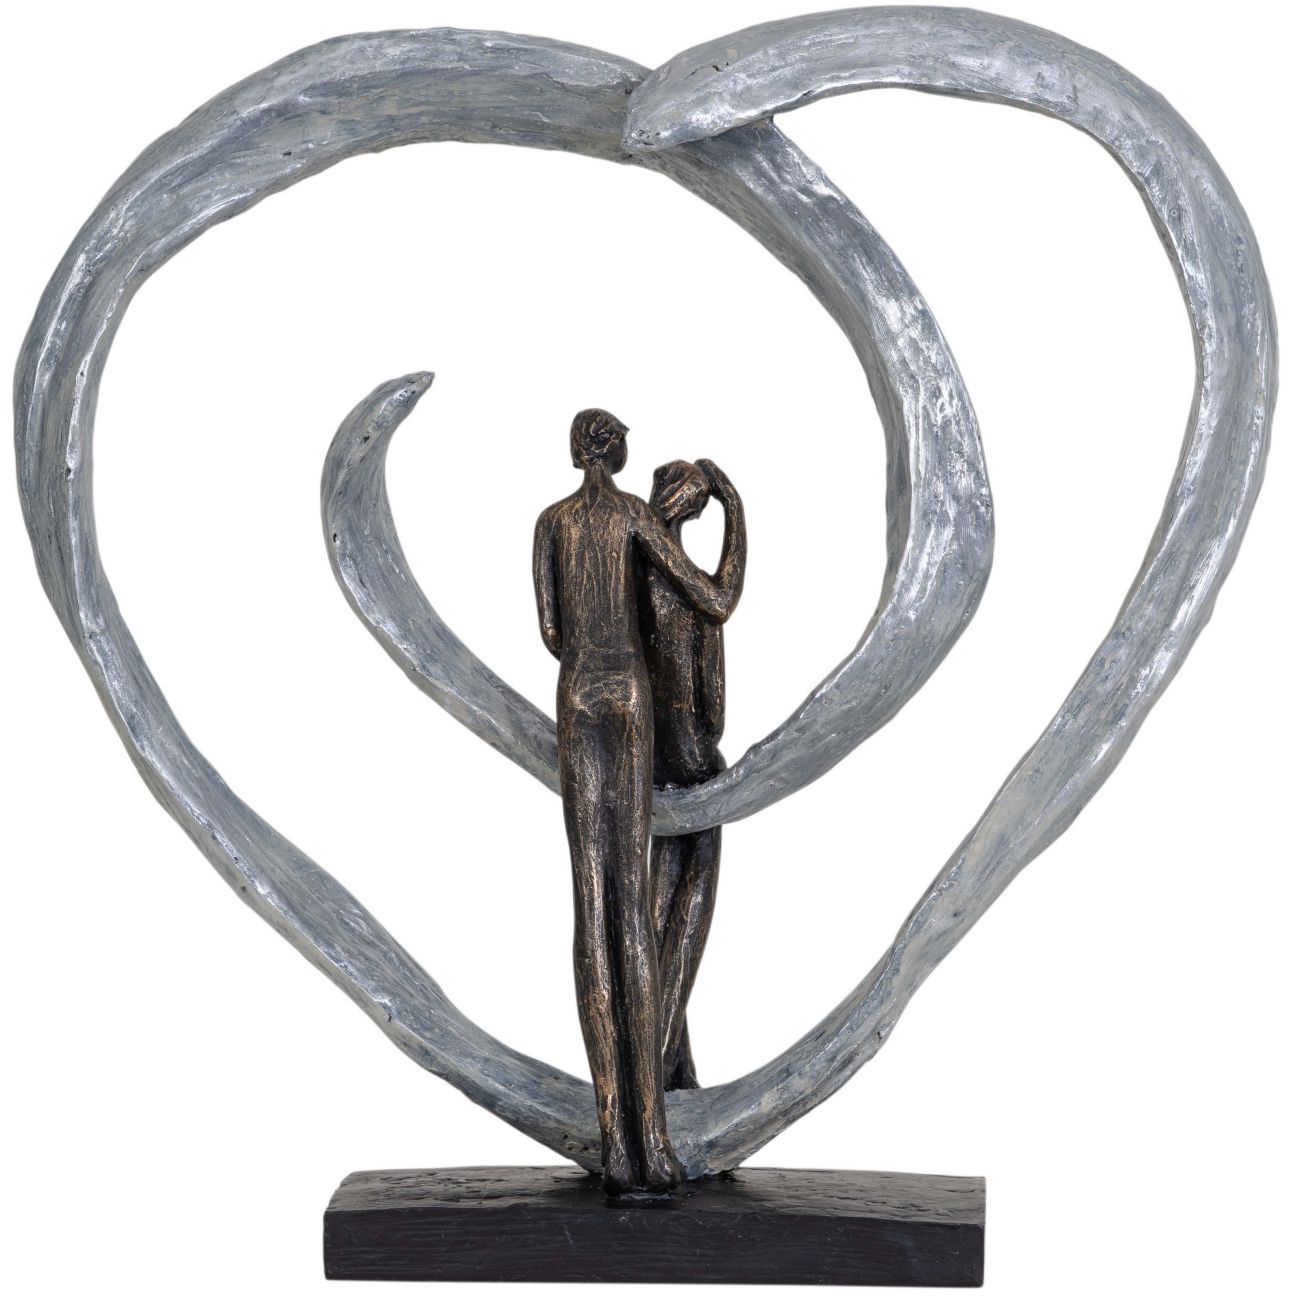 Love Sculpture In Circular Heart